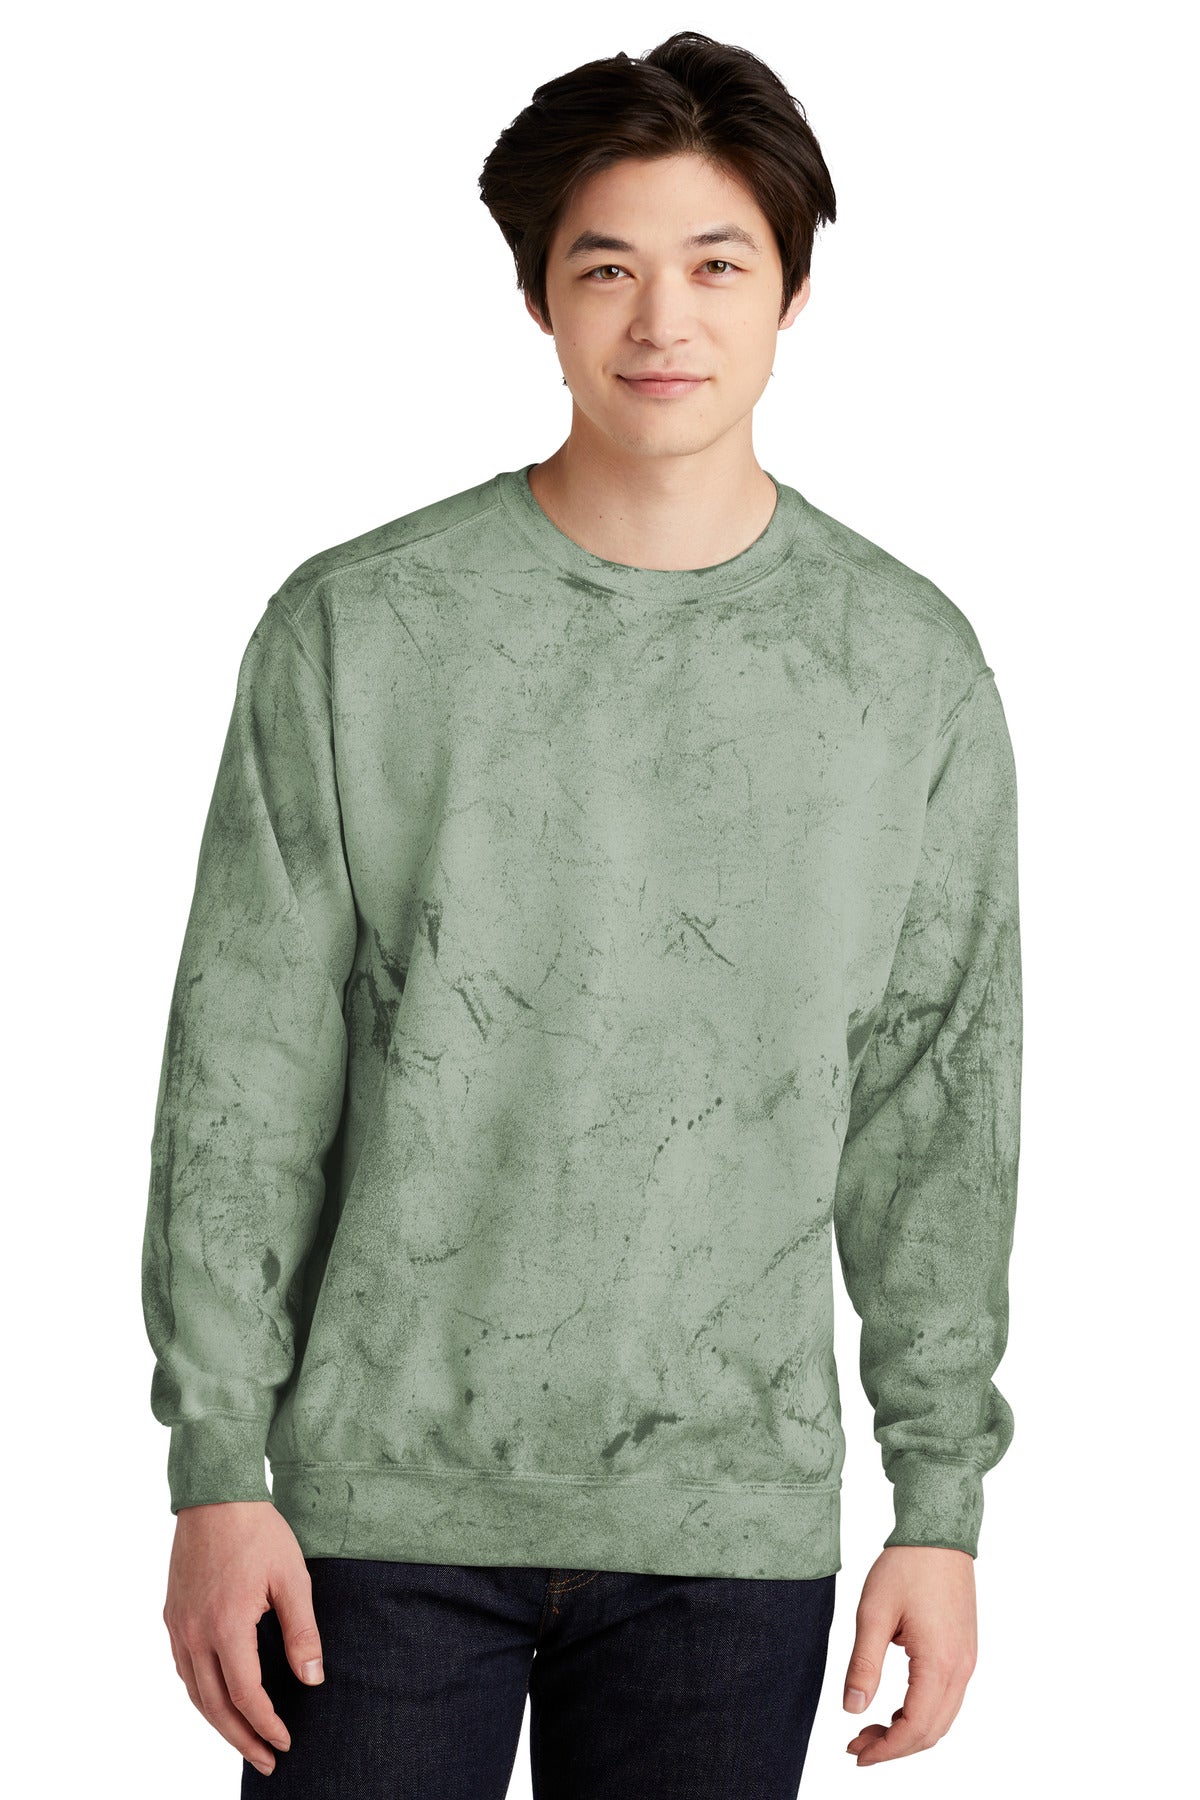 Comfort Colors® Color Blast Crewneck Sweatshirt 1545 - DFW Impression